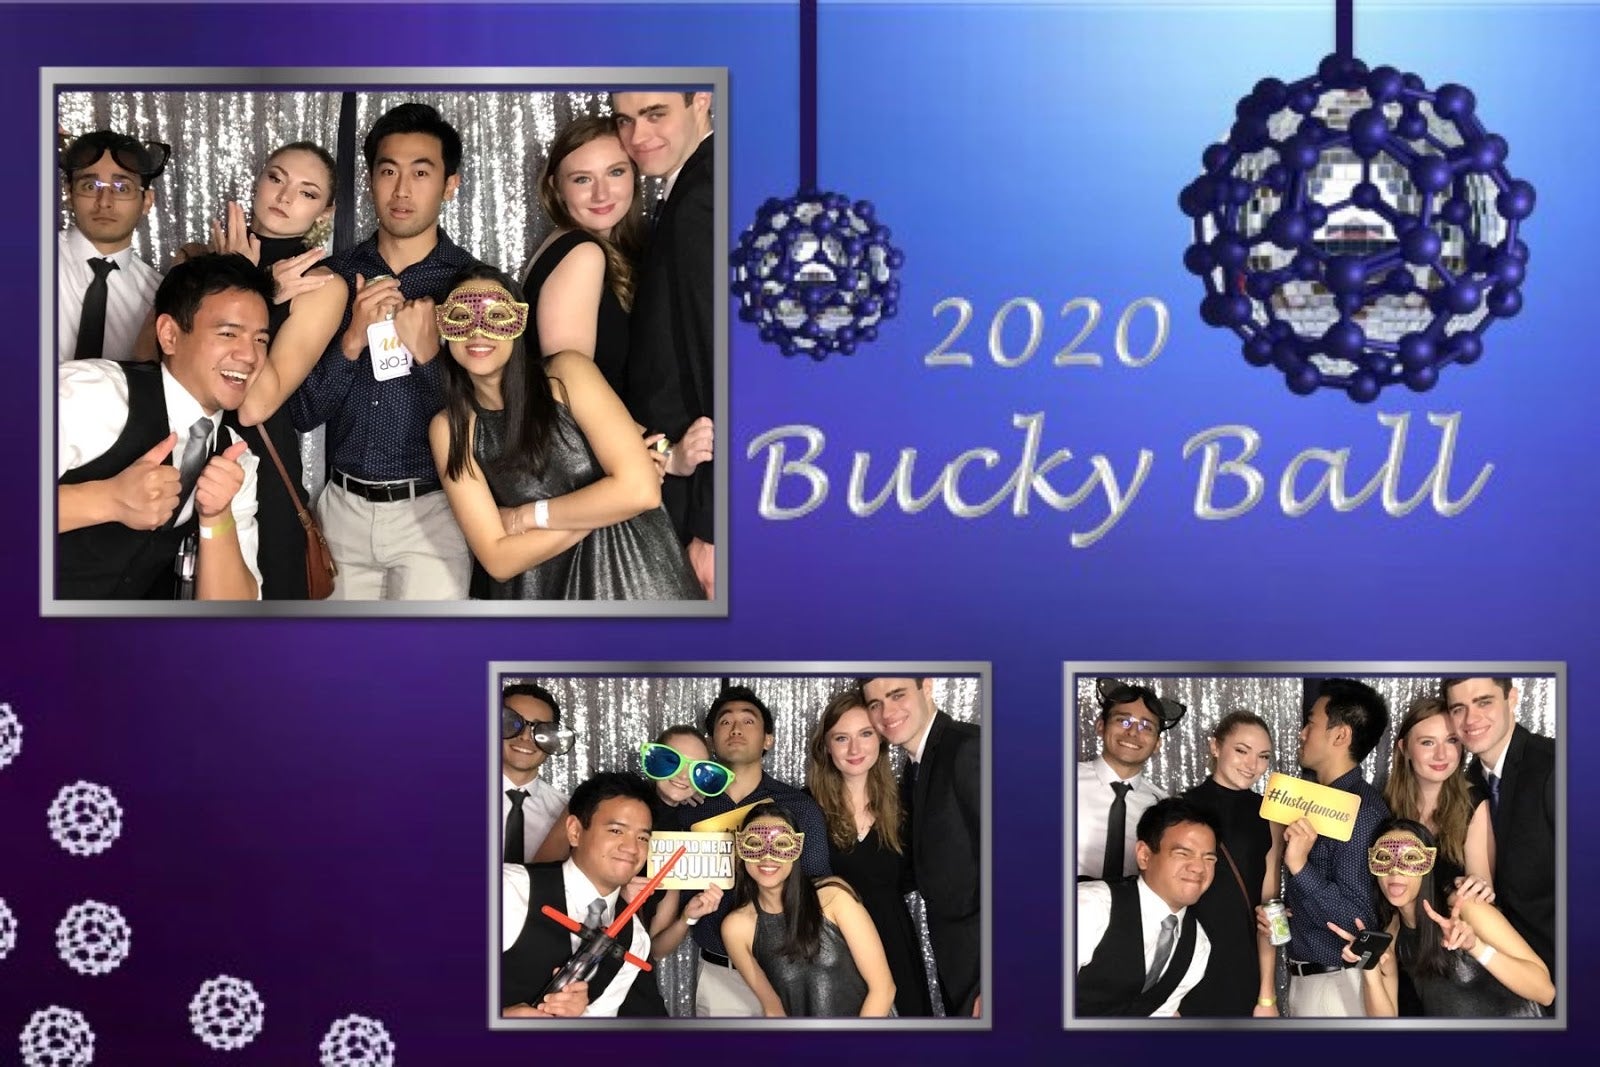 GMI students at the 2020 Buckballl